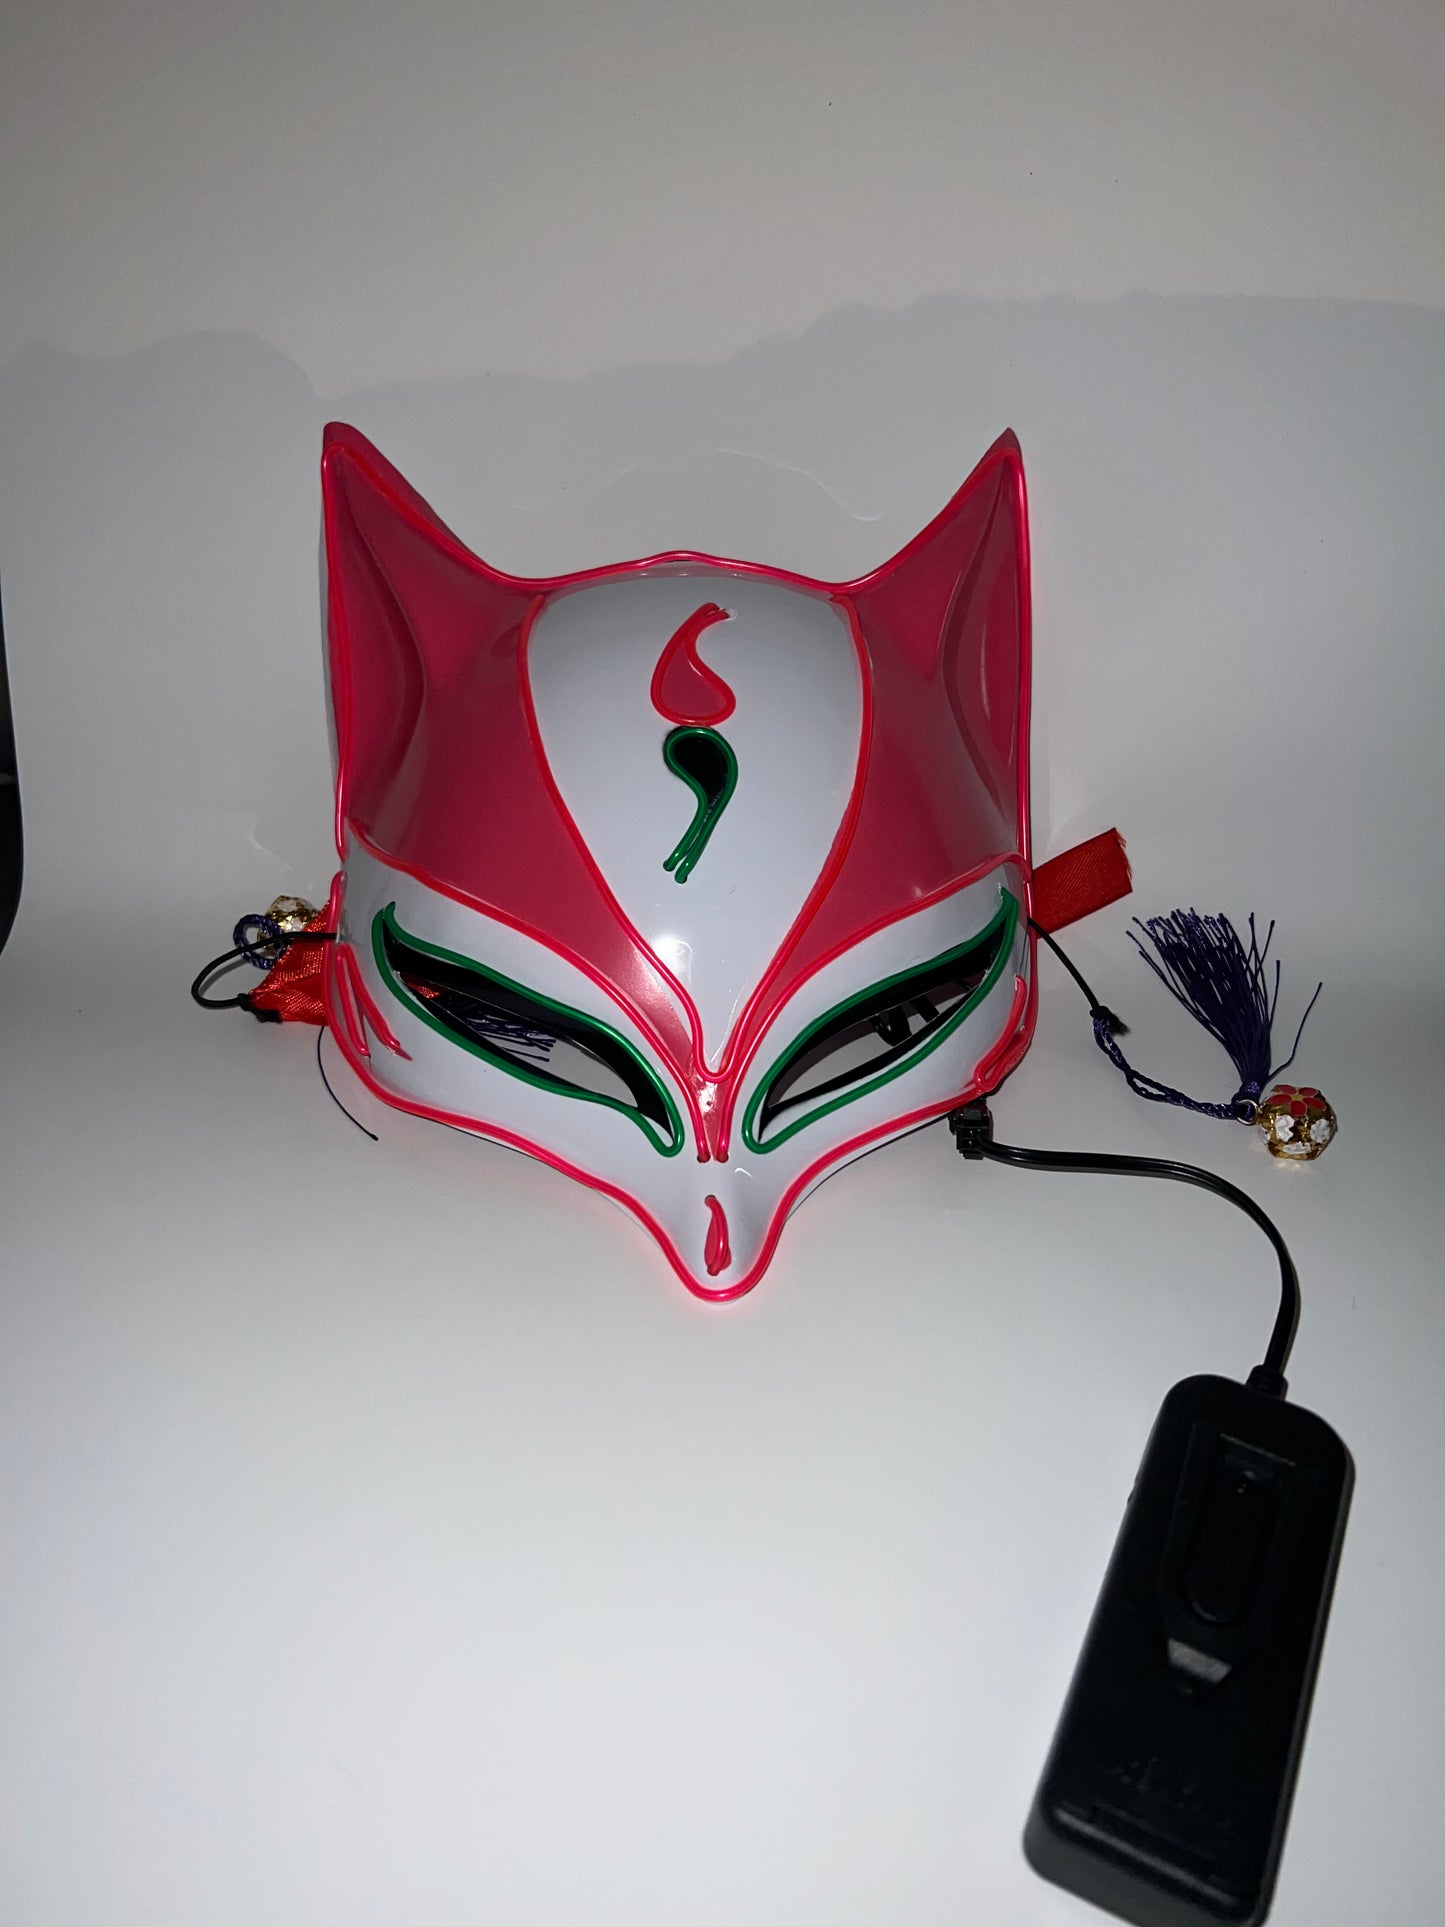 Anime fox el wire mask